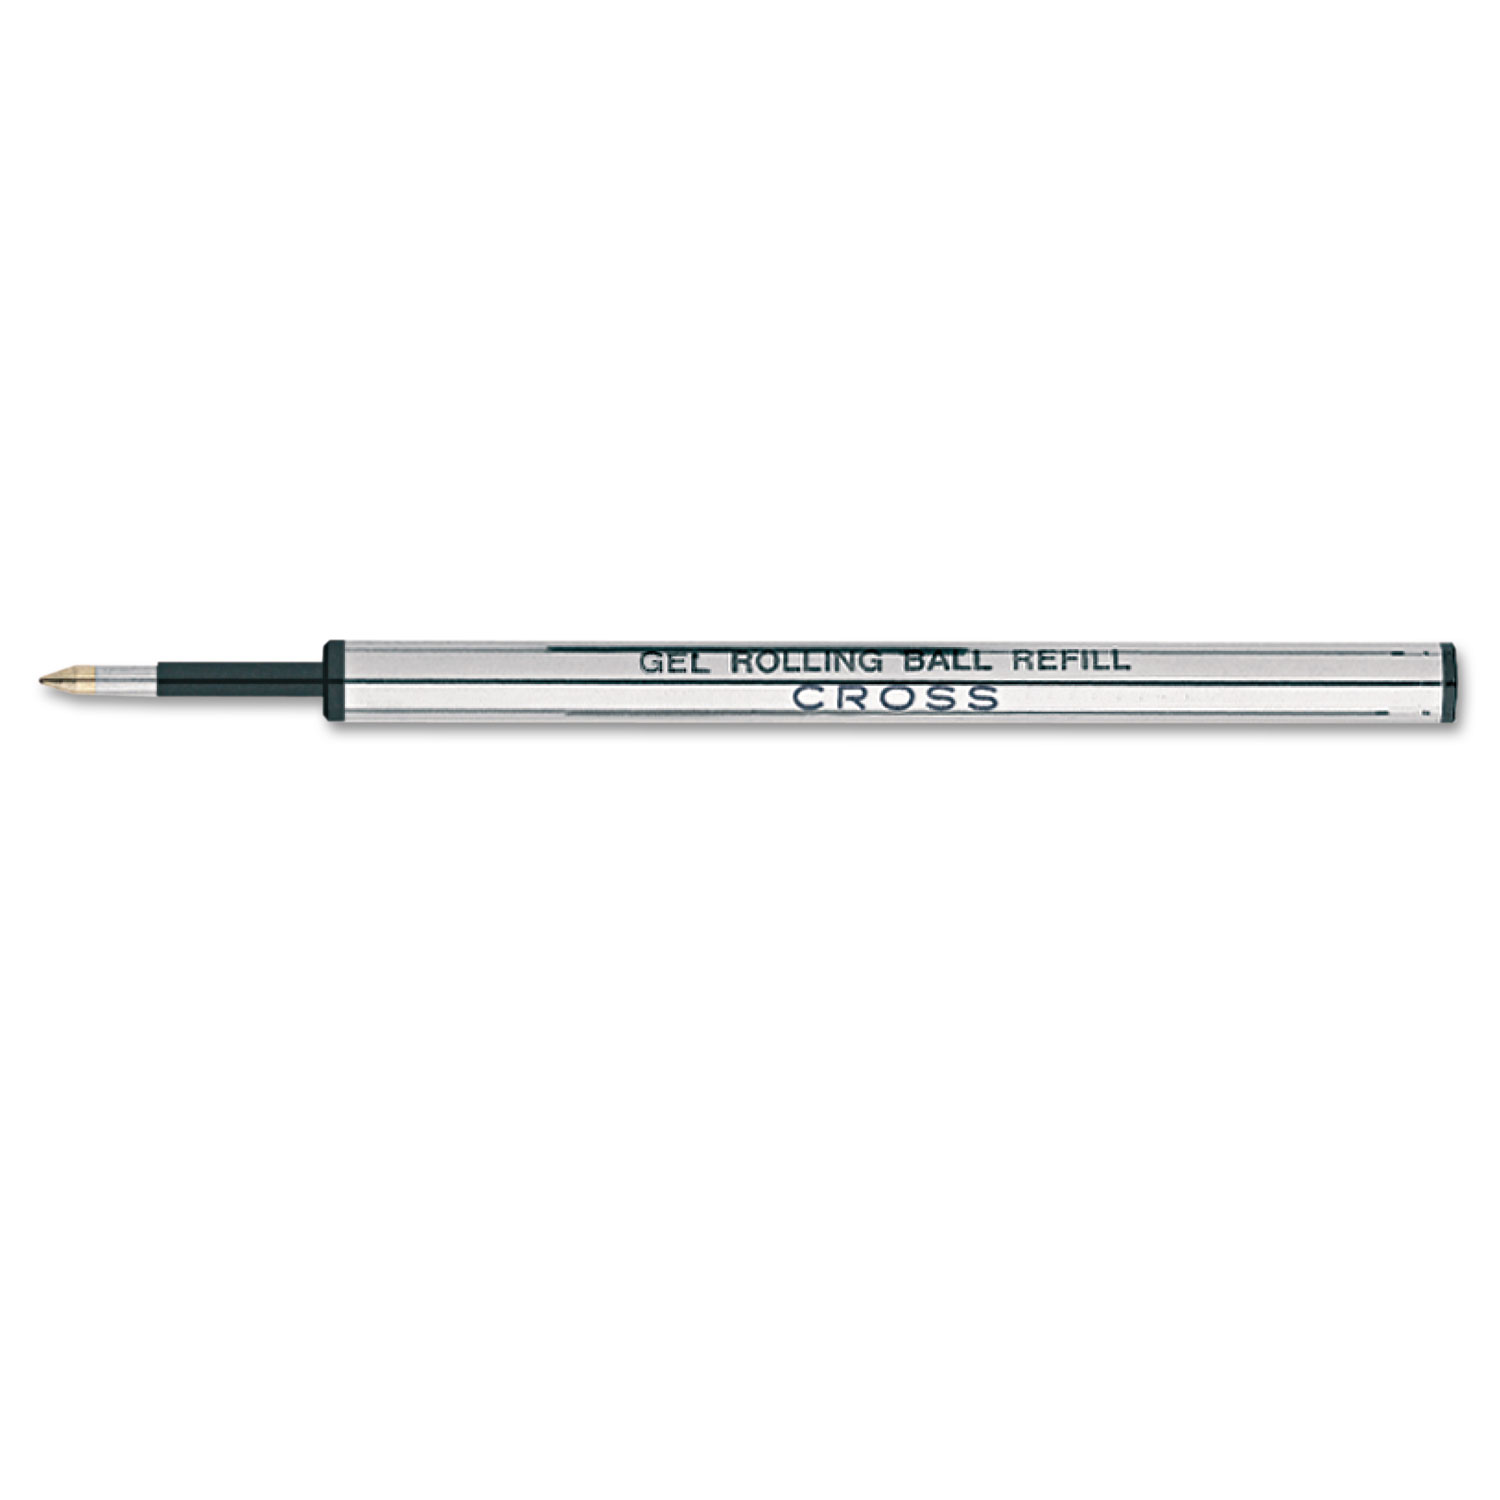  Cross 8523 Refill for Cross Selectip Gel Roller Ball Pens, Medium Point, Black Ink (CRO8523) 